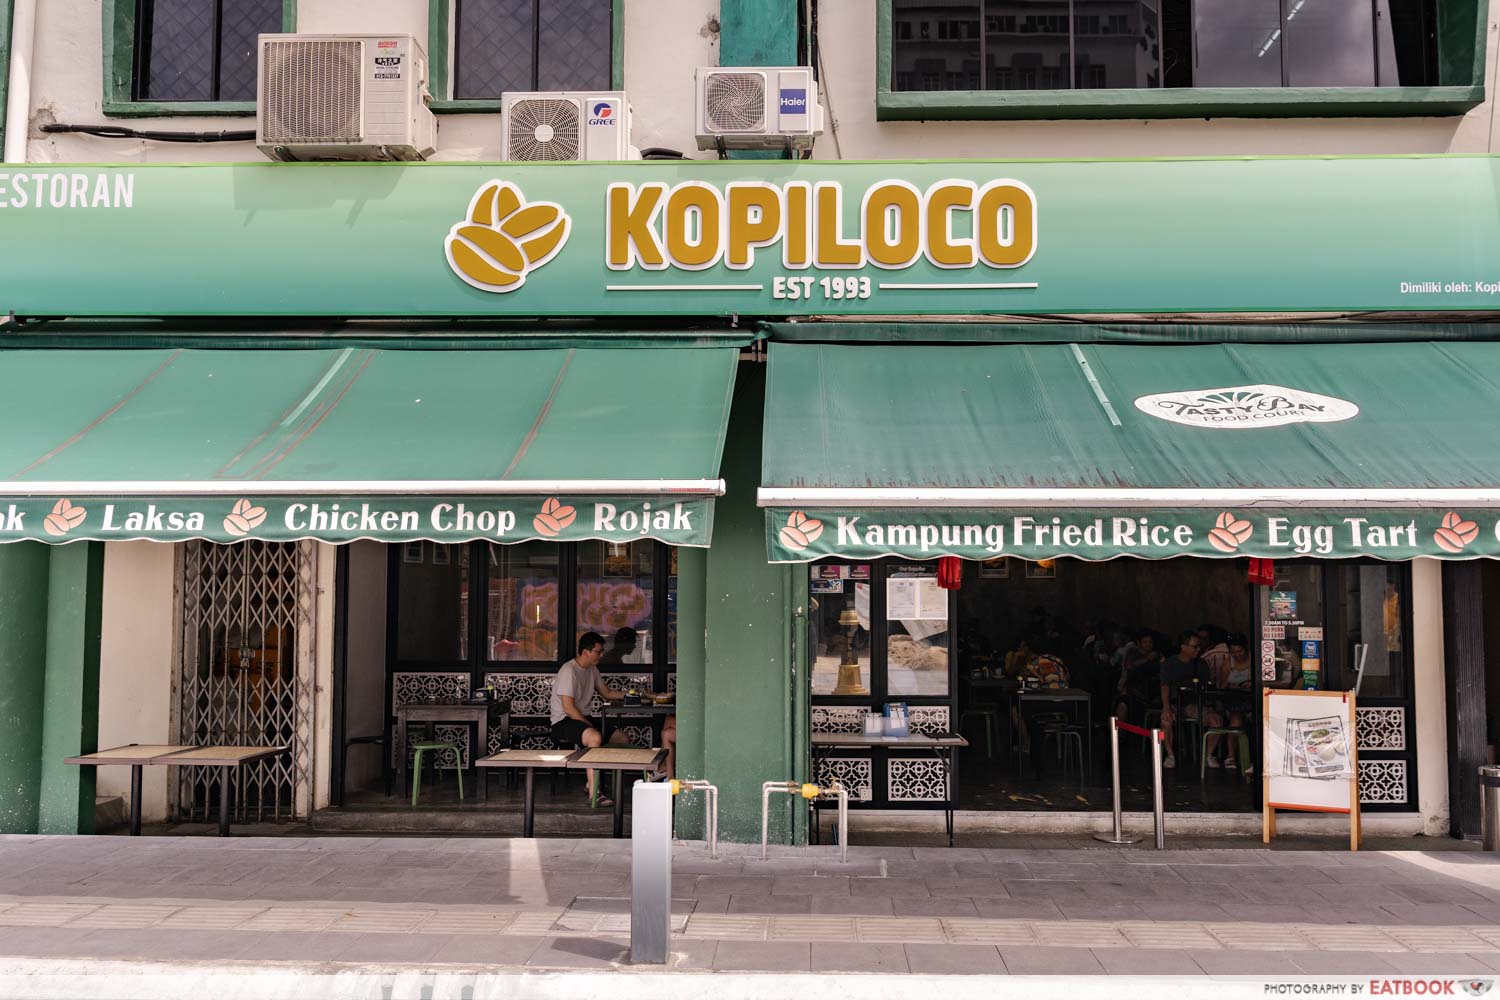 Kopiloco-by-1993-storefront